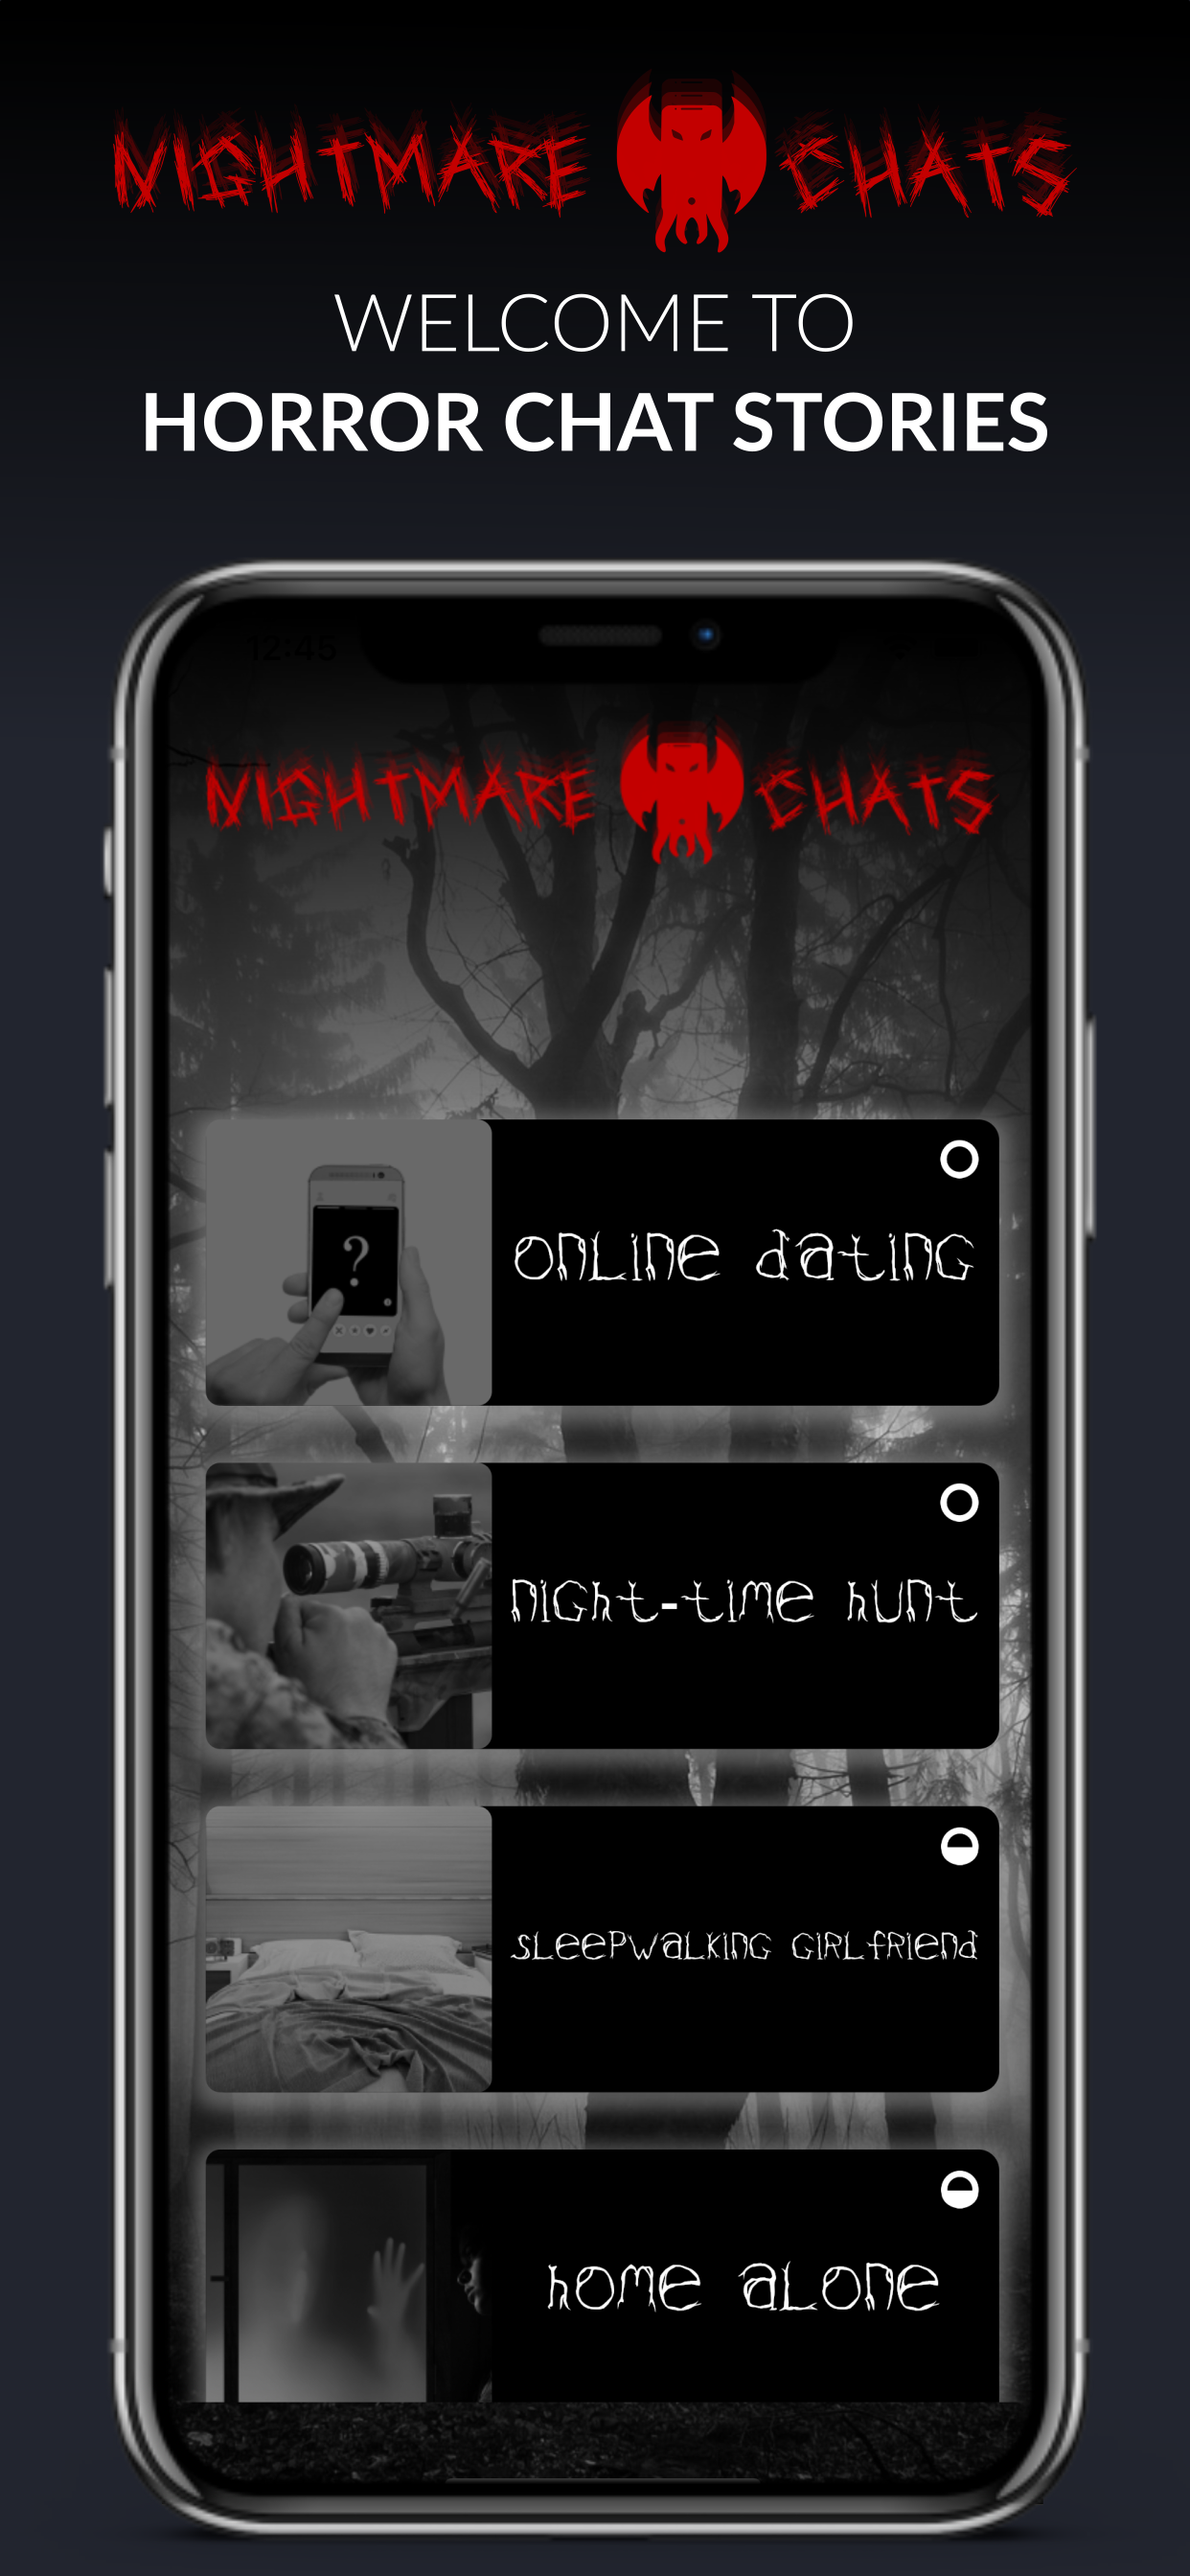 Nightmare Chats Screenshot 1